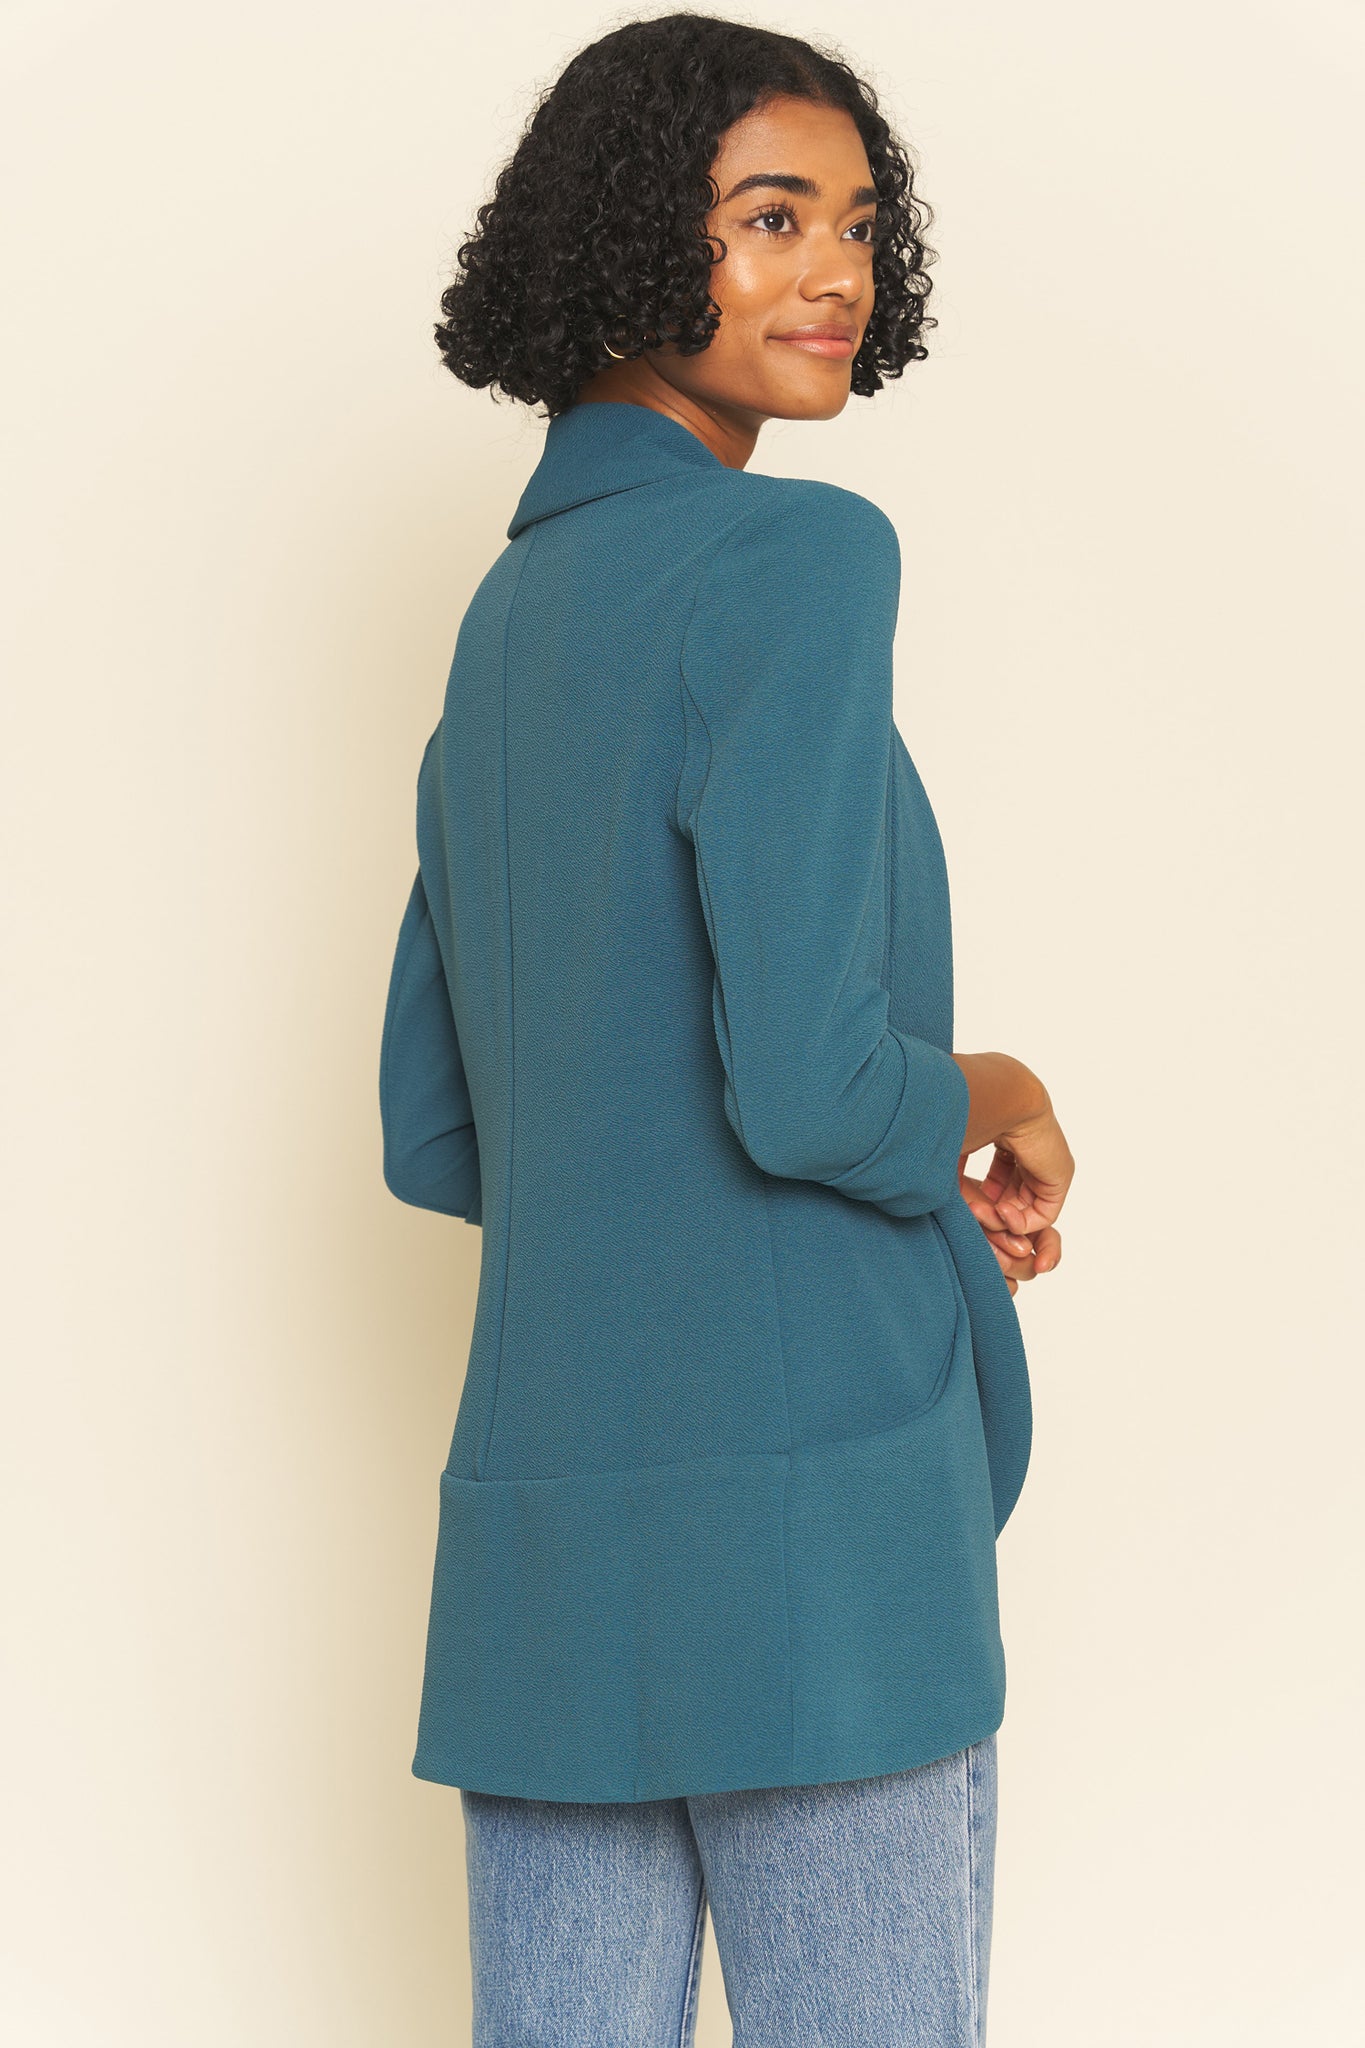 Classic Melanie Shawl Simple Staple Moroccan Blue Color Workwear Blazer Jacket Everyday Shawl Front Pockets Best Seller Customer Favorite